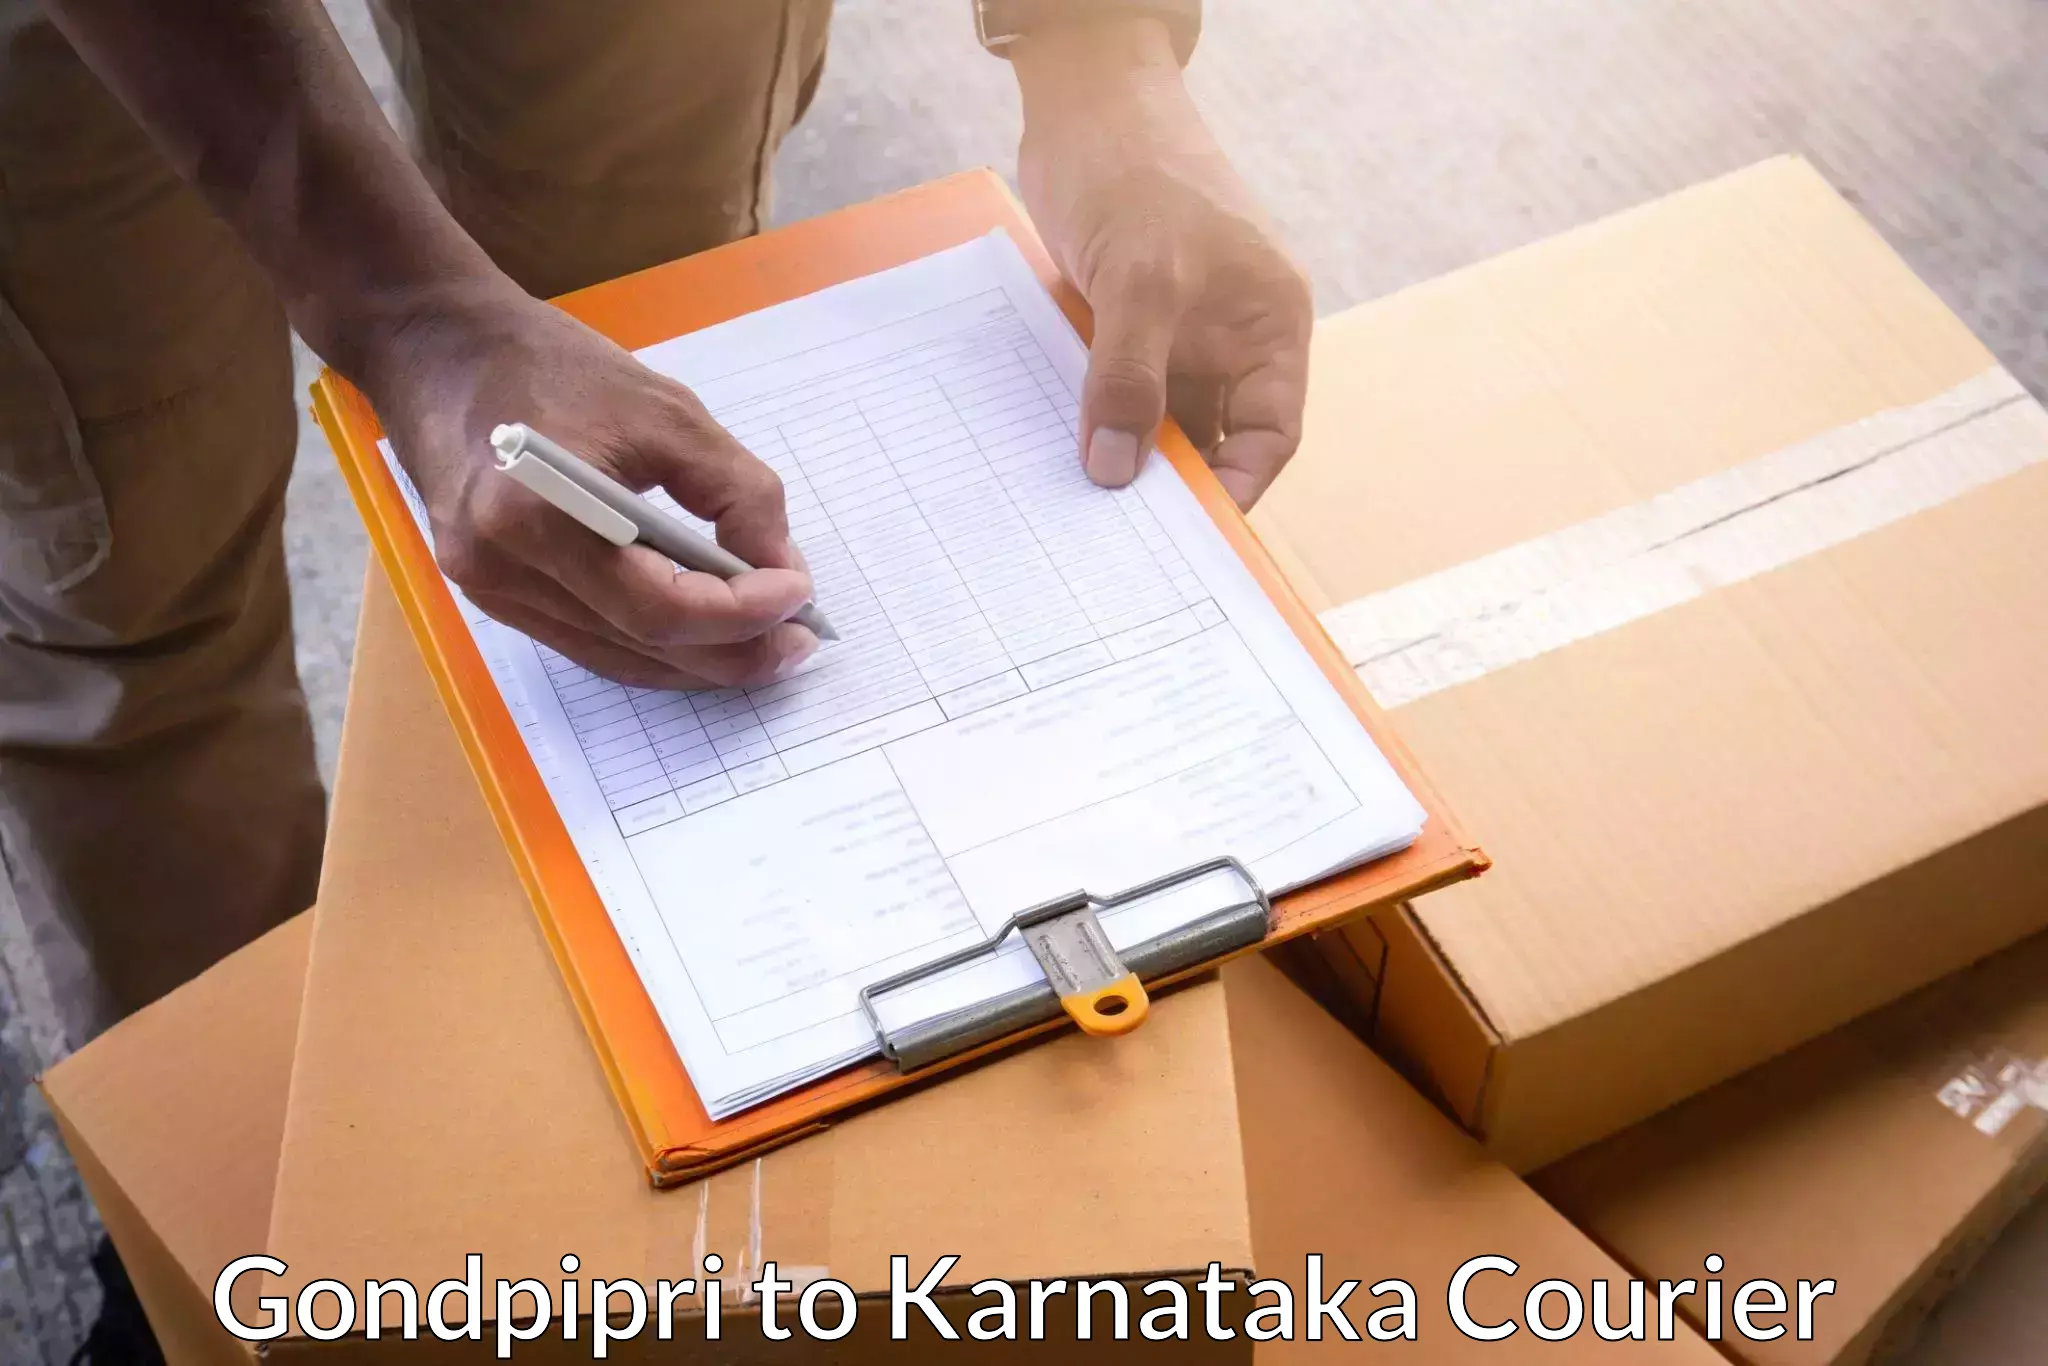 24/7 courier service Gondpipri to Karnataka